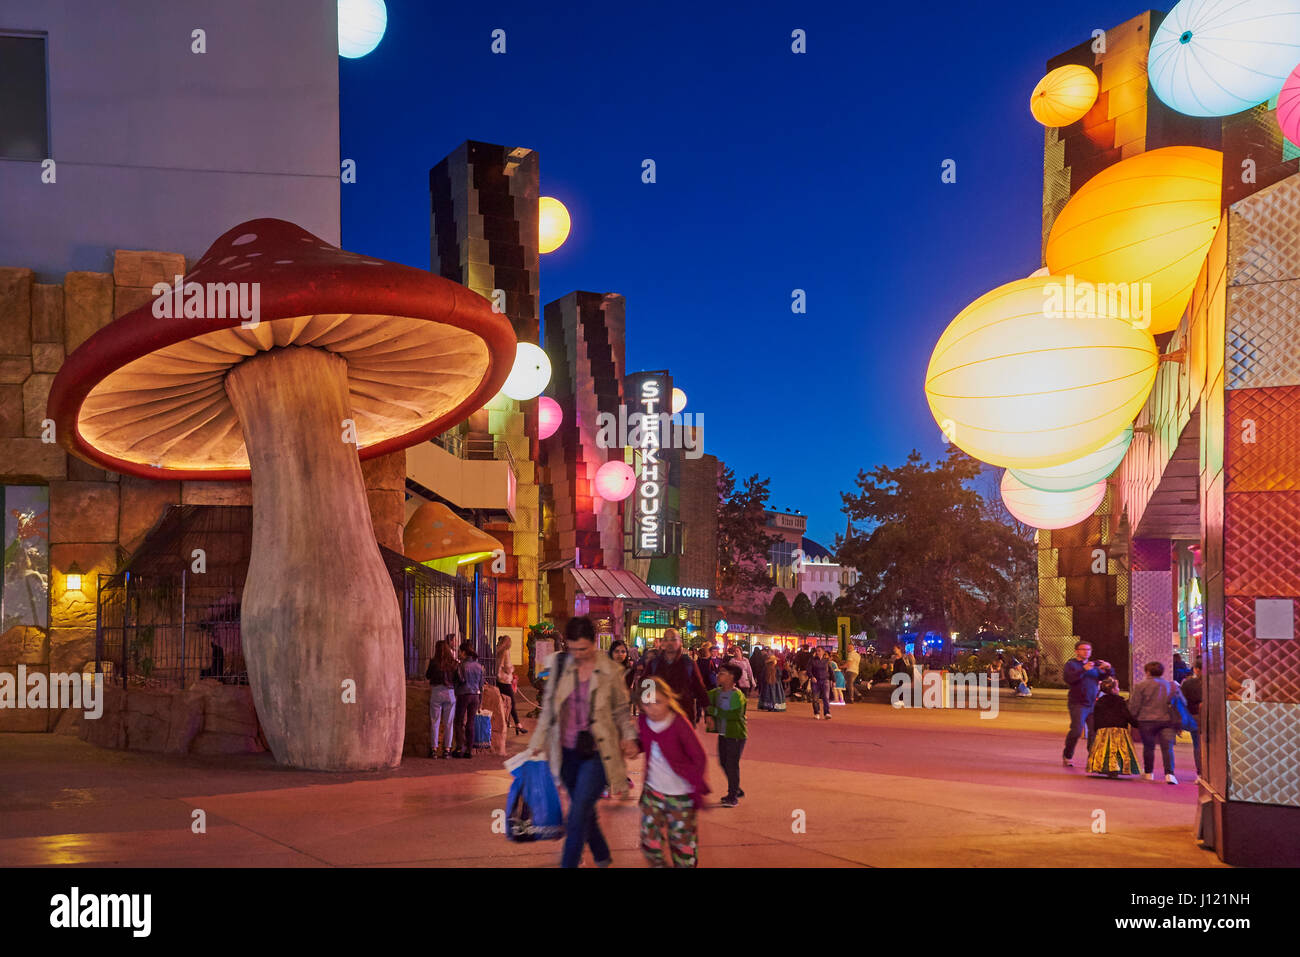 Disney Village at Disneyland in France at night time Stock Photo